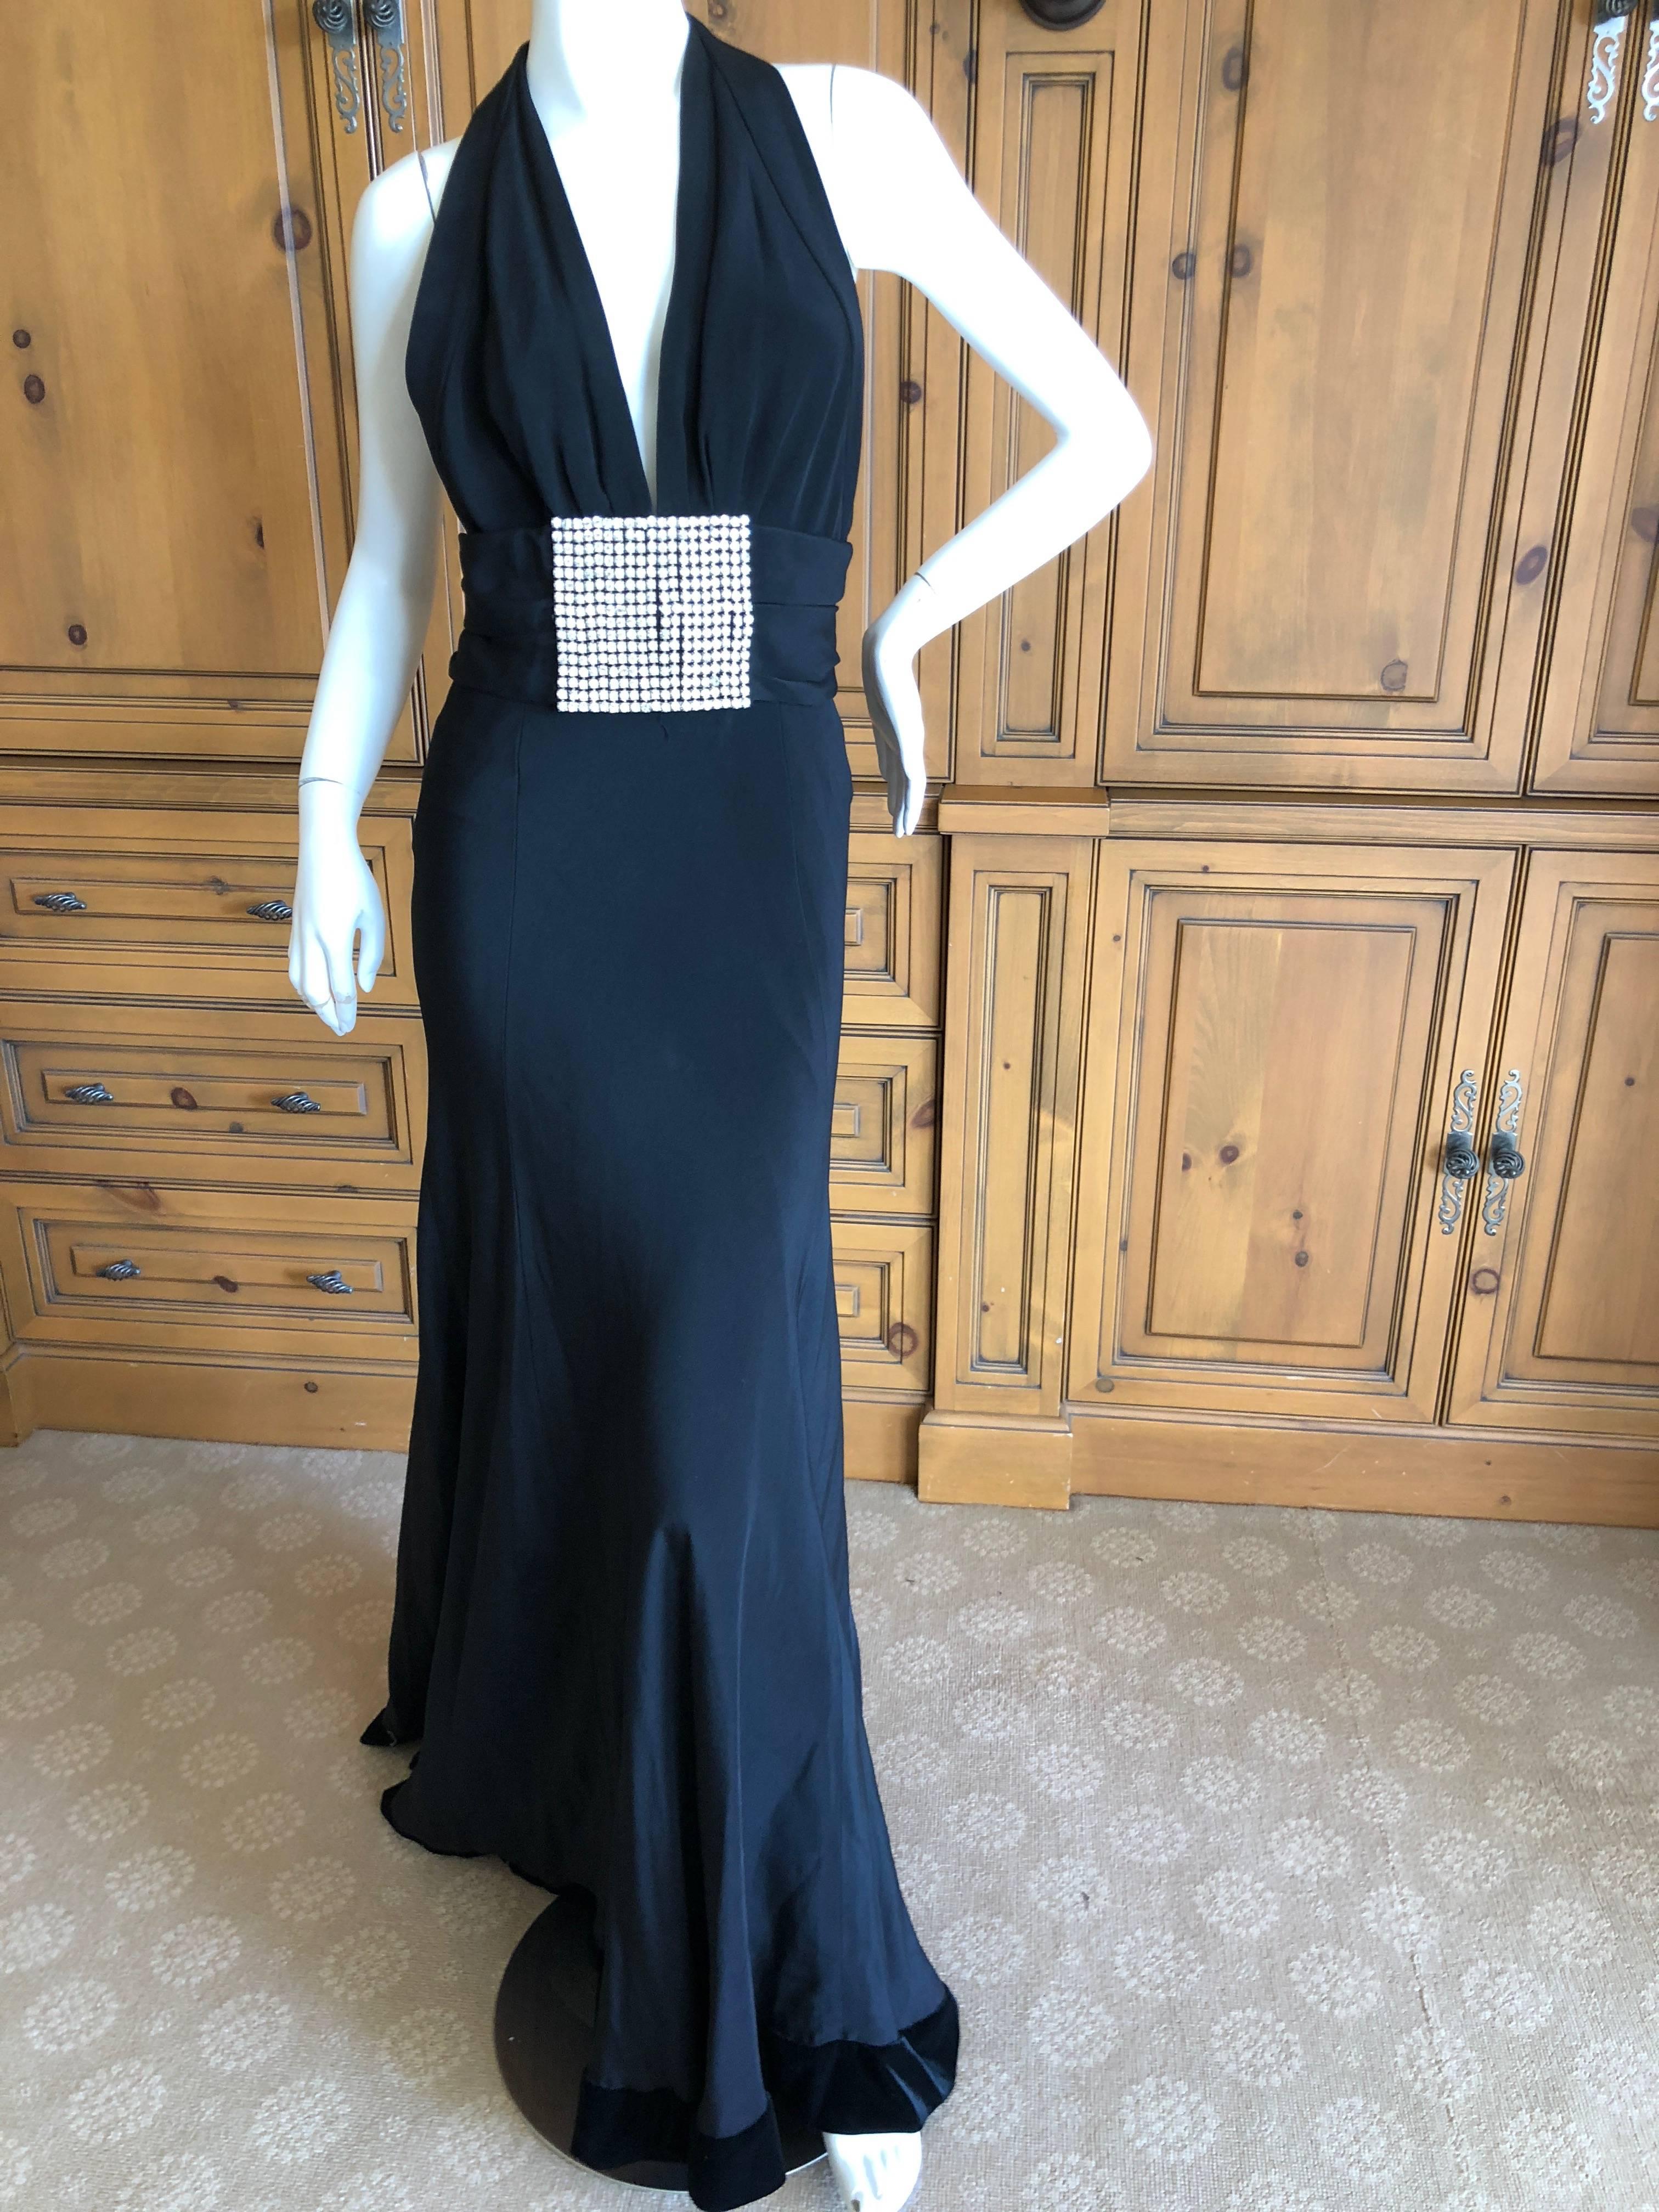 Cardinali Black Low Cut Halter Evening Dress with Huge Rhinestone Crystal Belt For Sale 6